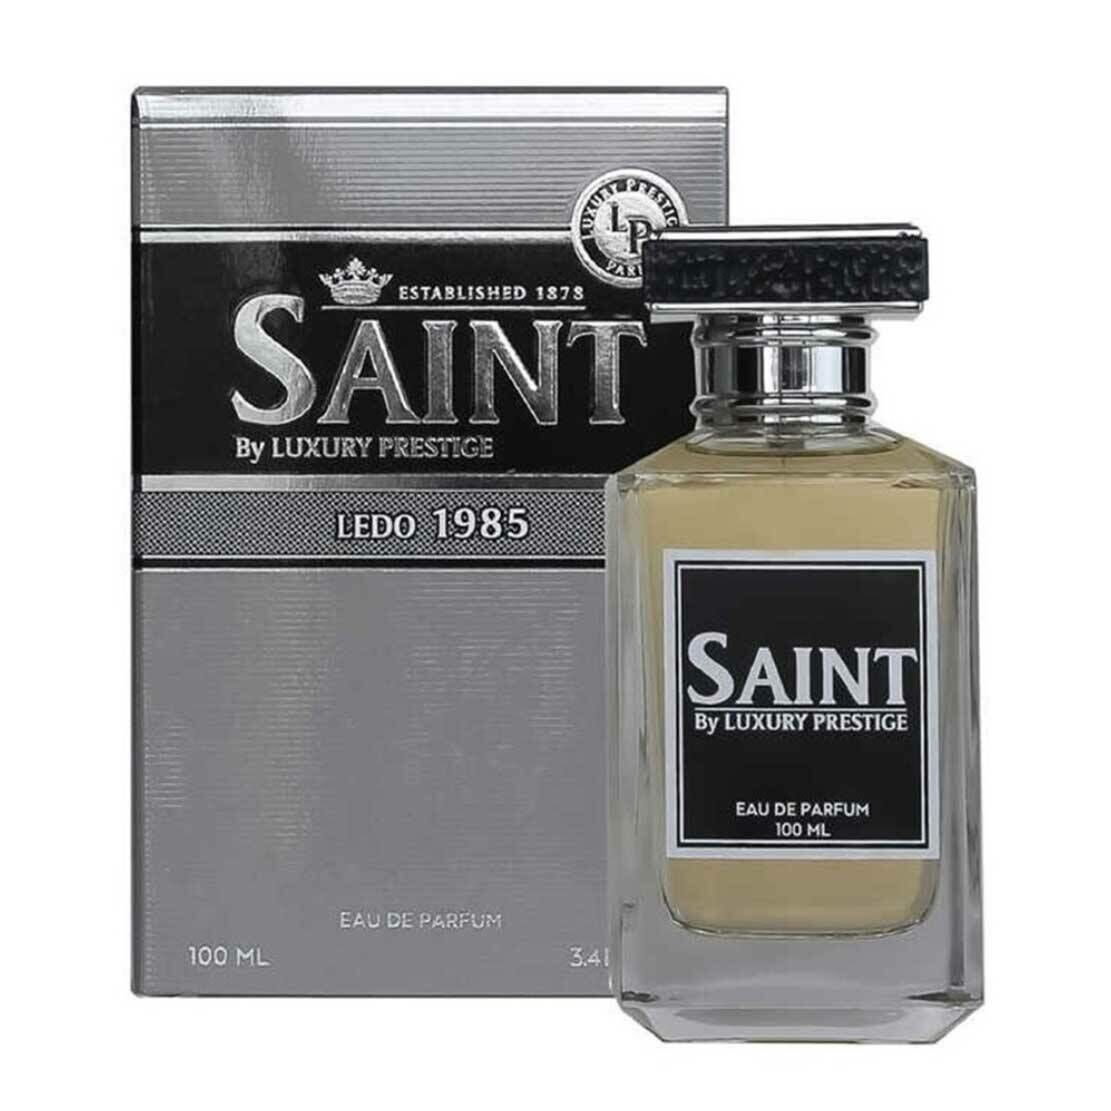 Luxury Prestige Paris Saint Ledo 1985 100 ml